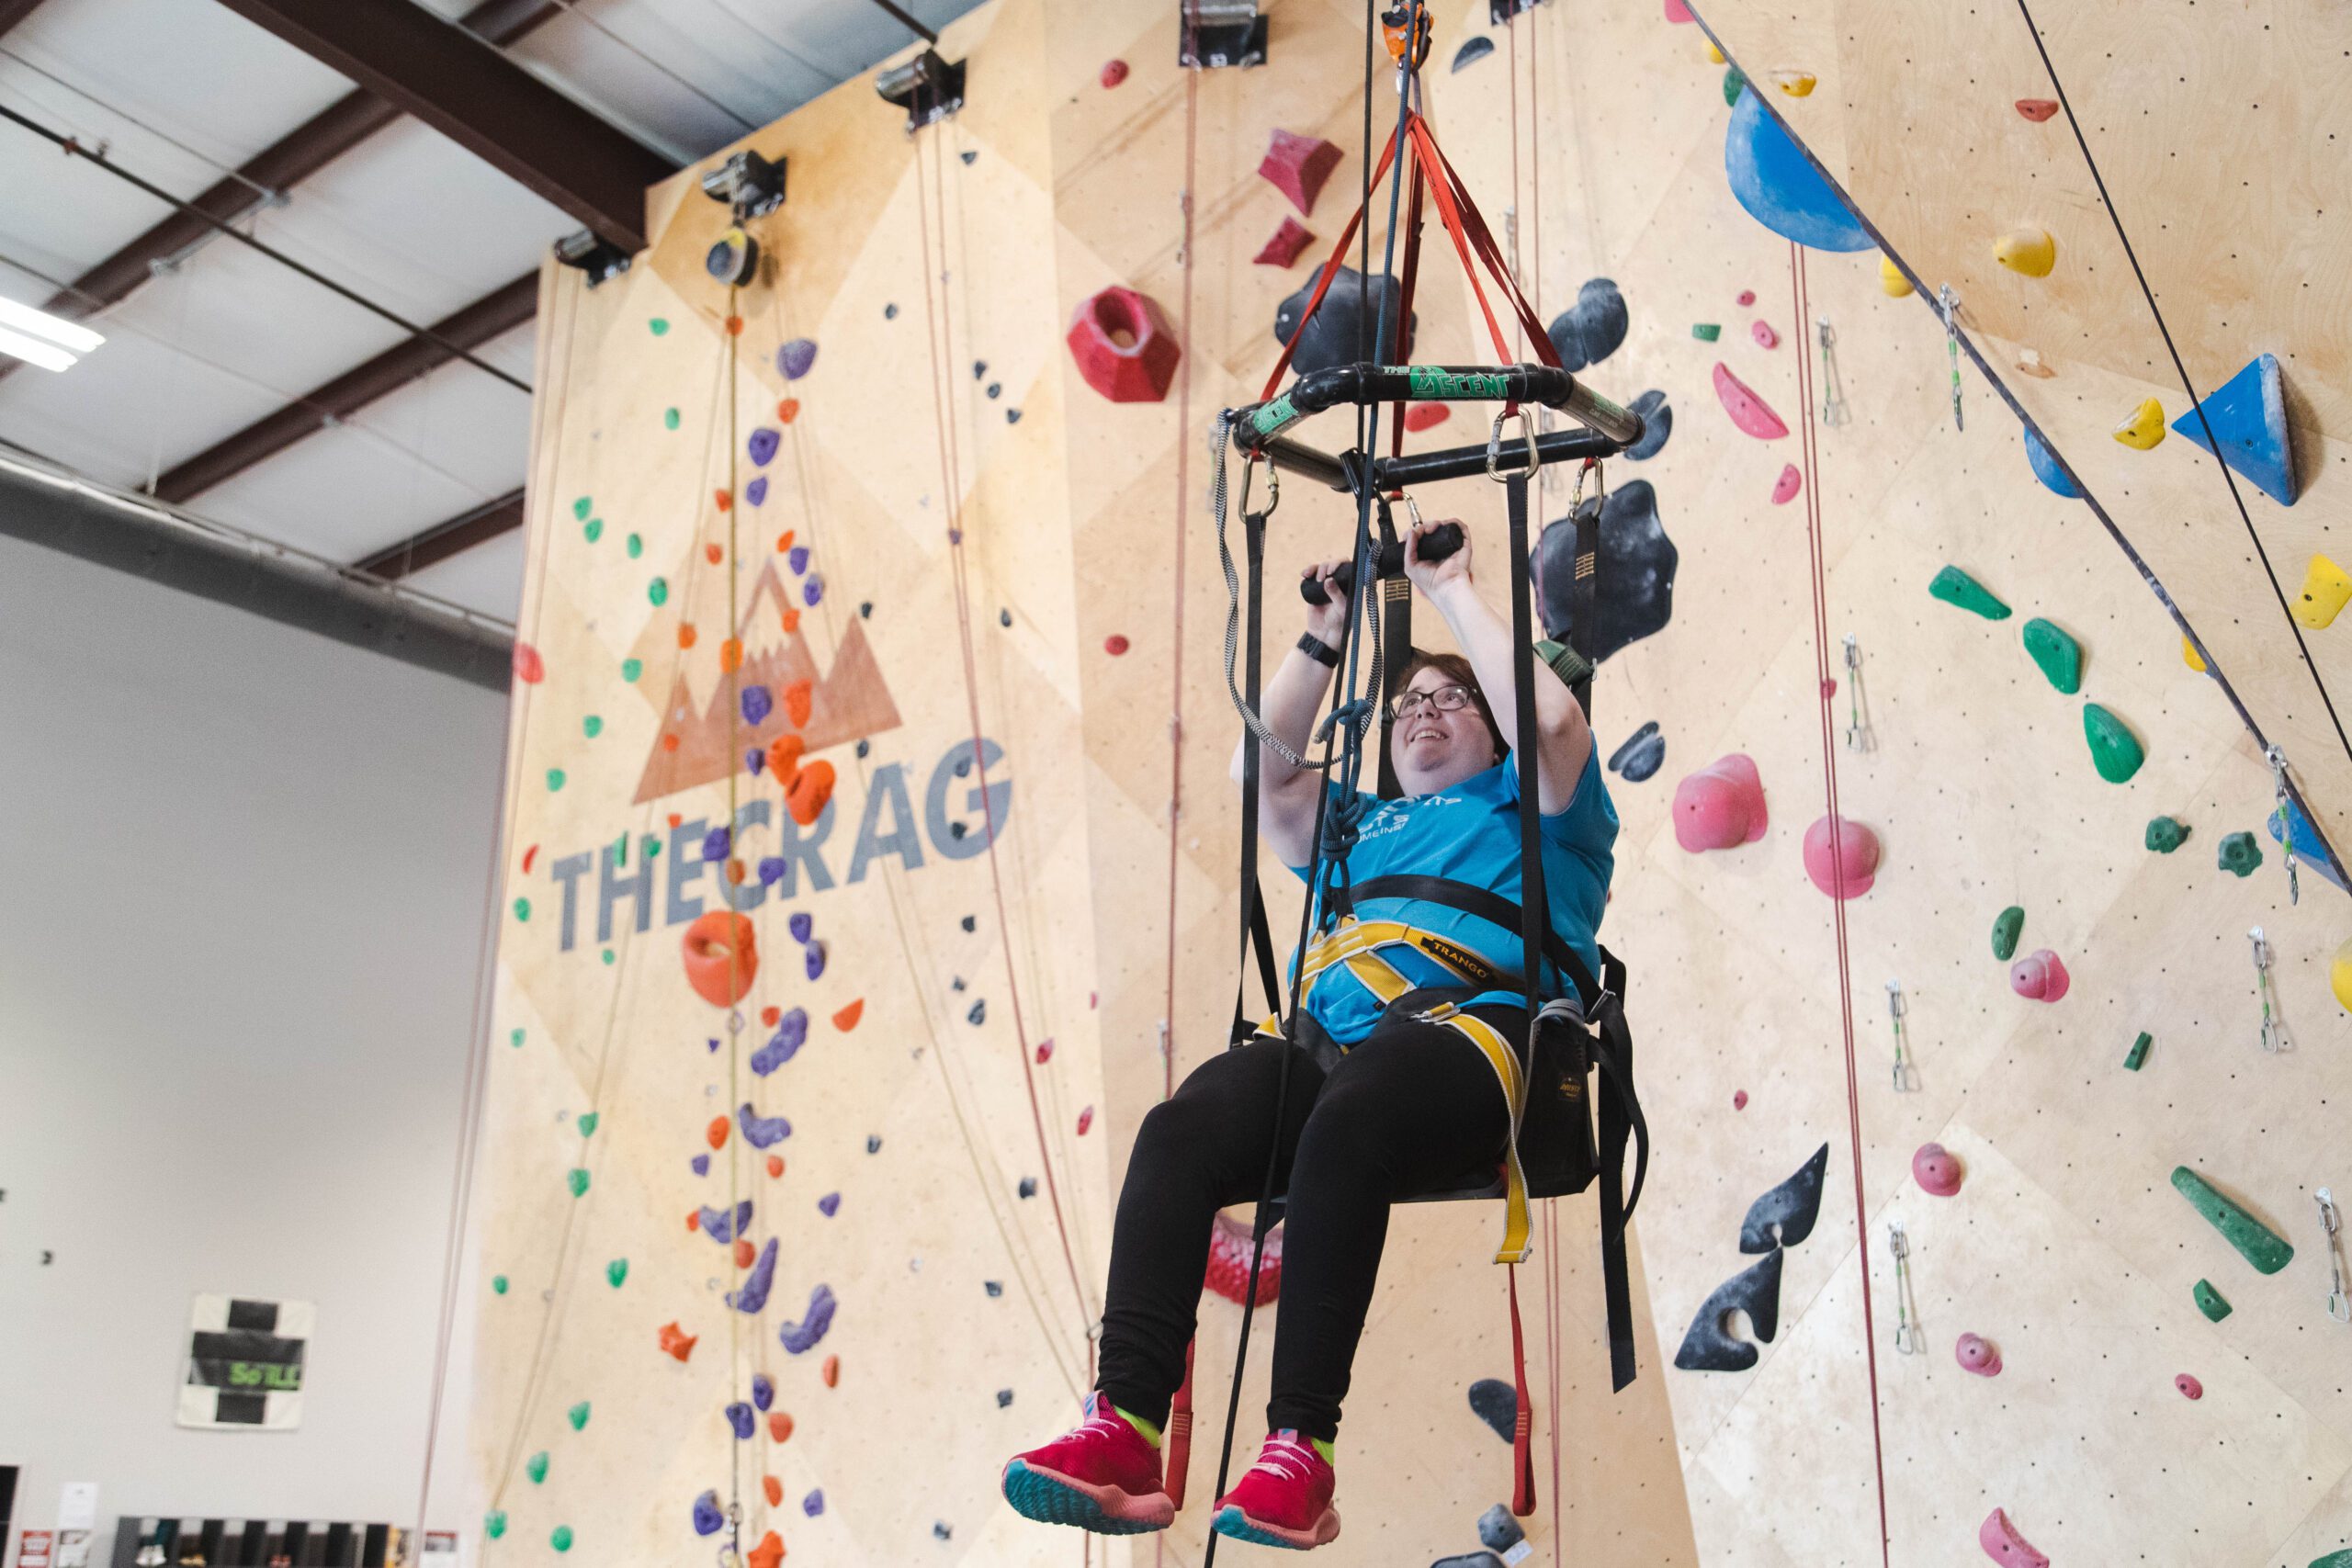 Adaptive climbing participates smiles